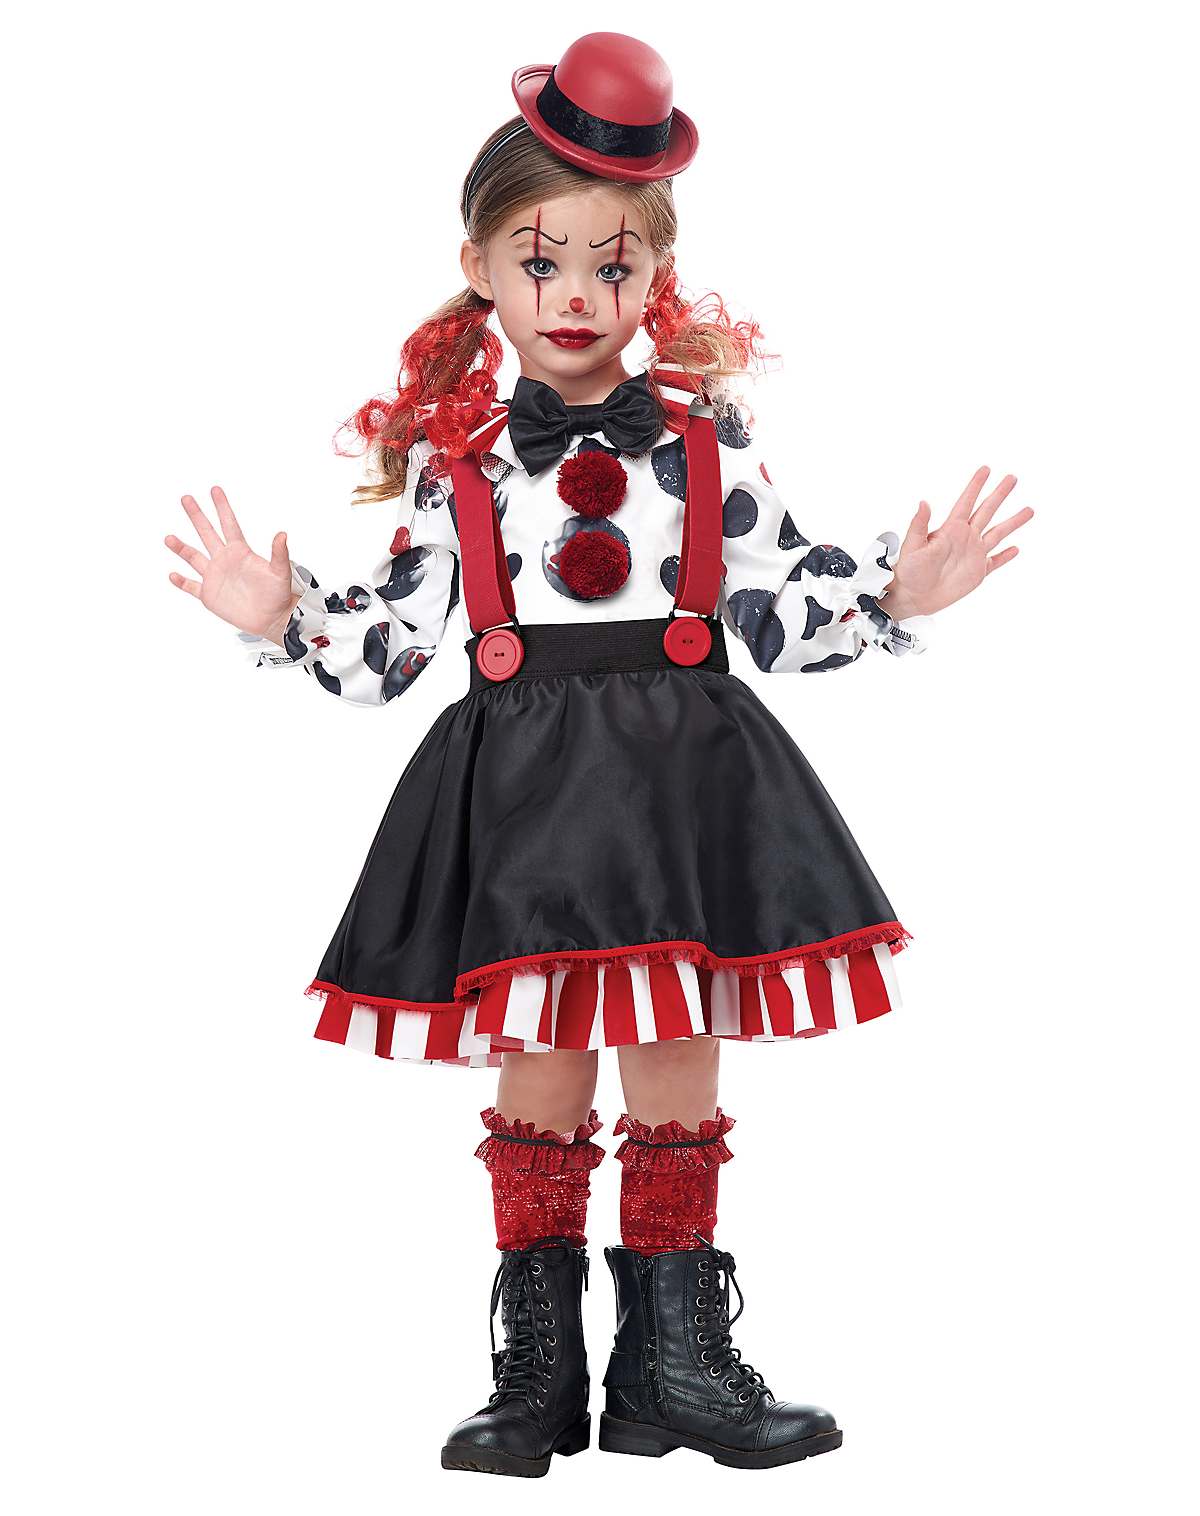 Toddler Kreepy Clown Costume